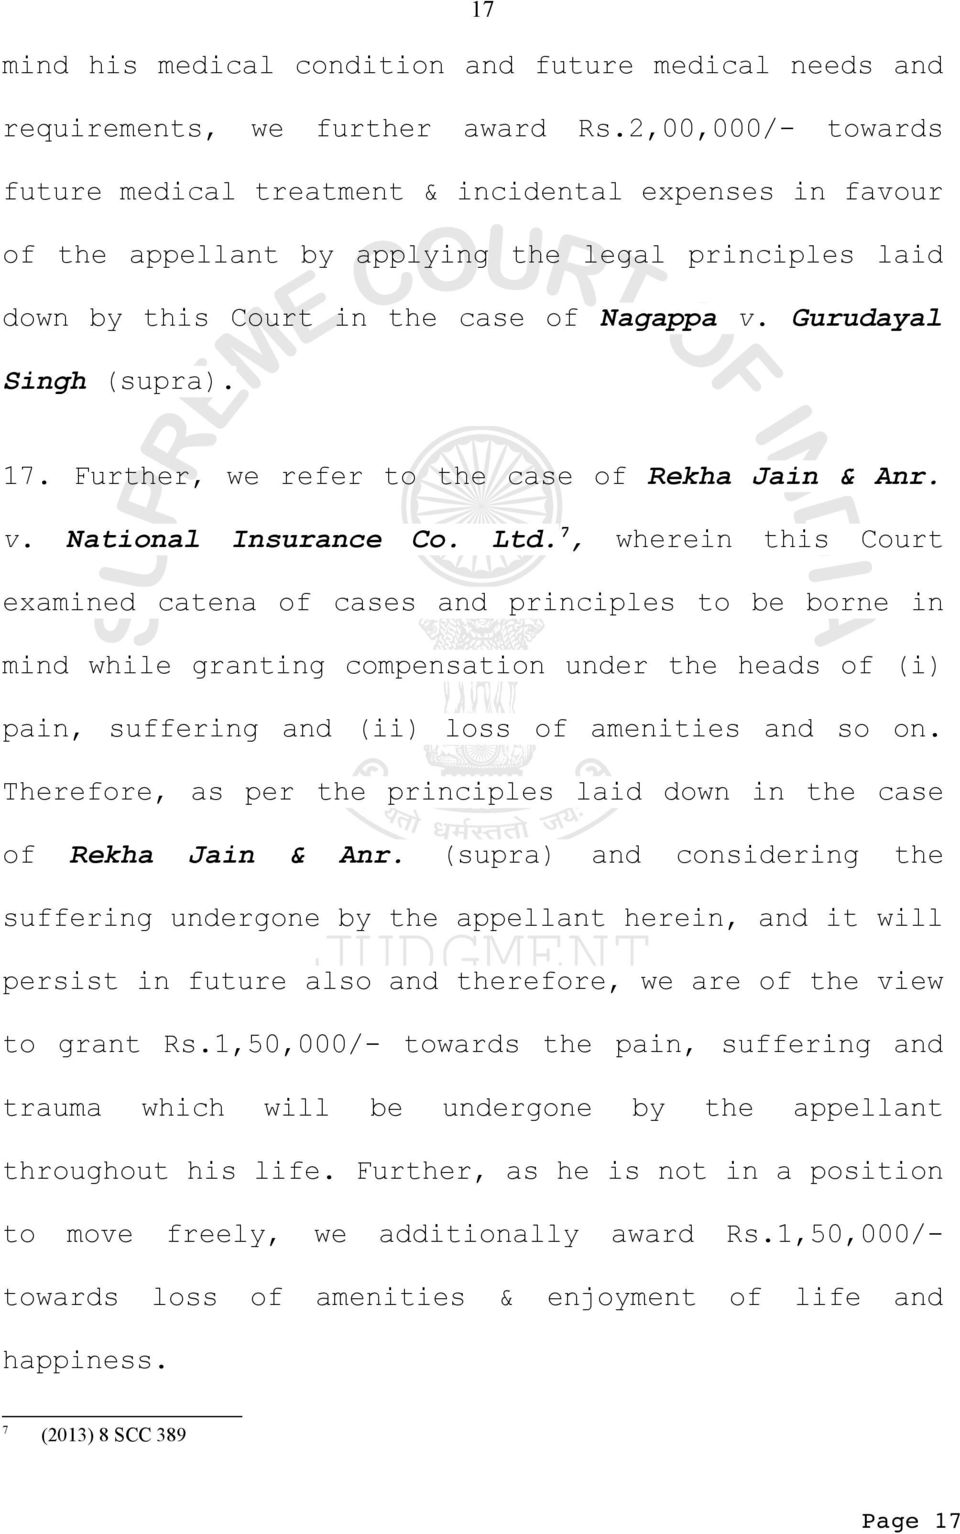 17. Further, we refer to the case of Rekha Jain & Anr. v. National Insurance Co. Ltd.